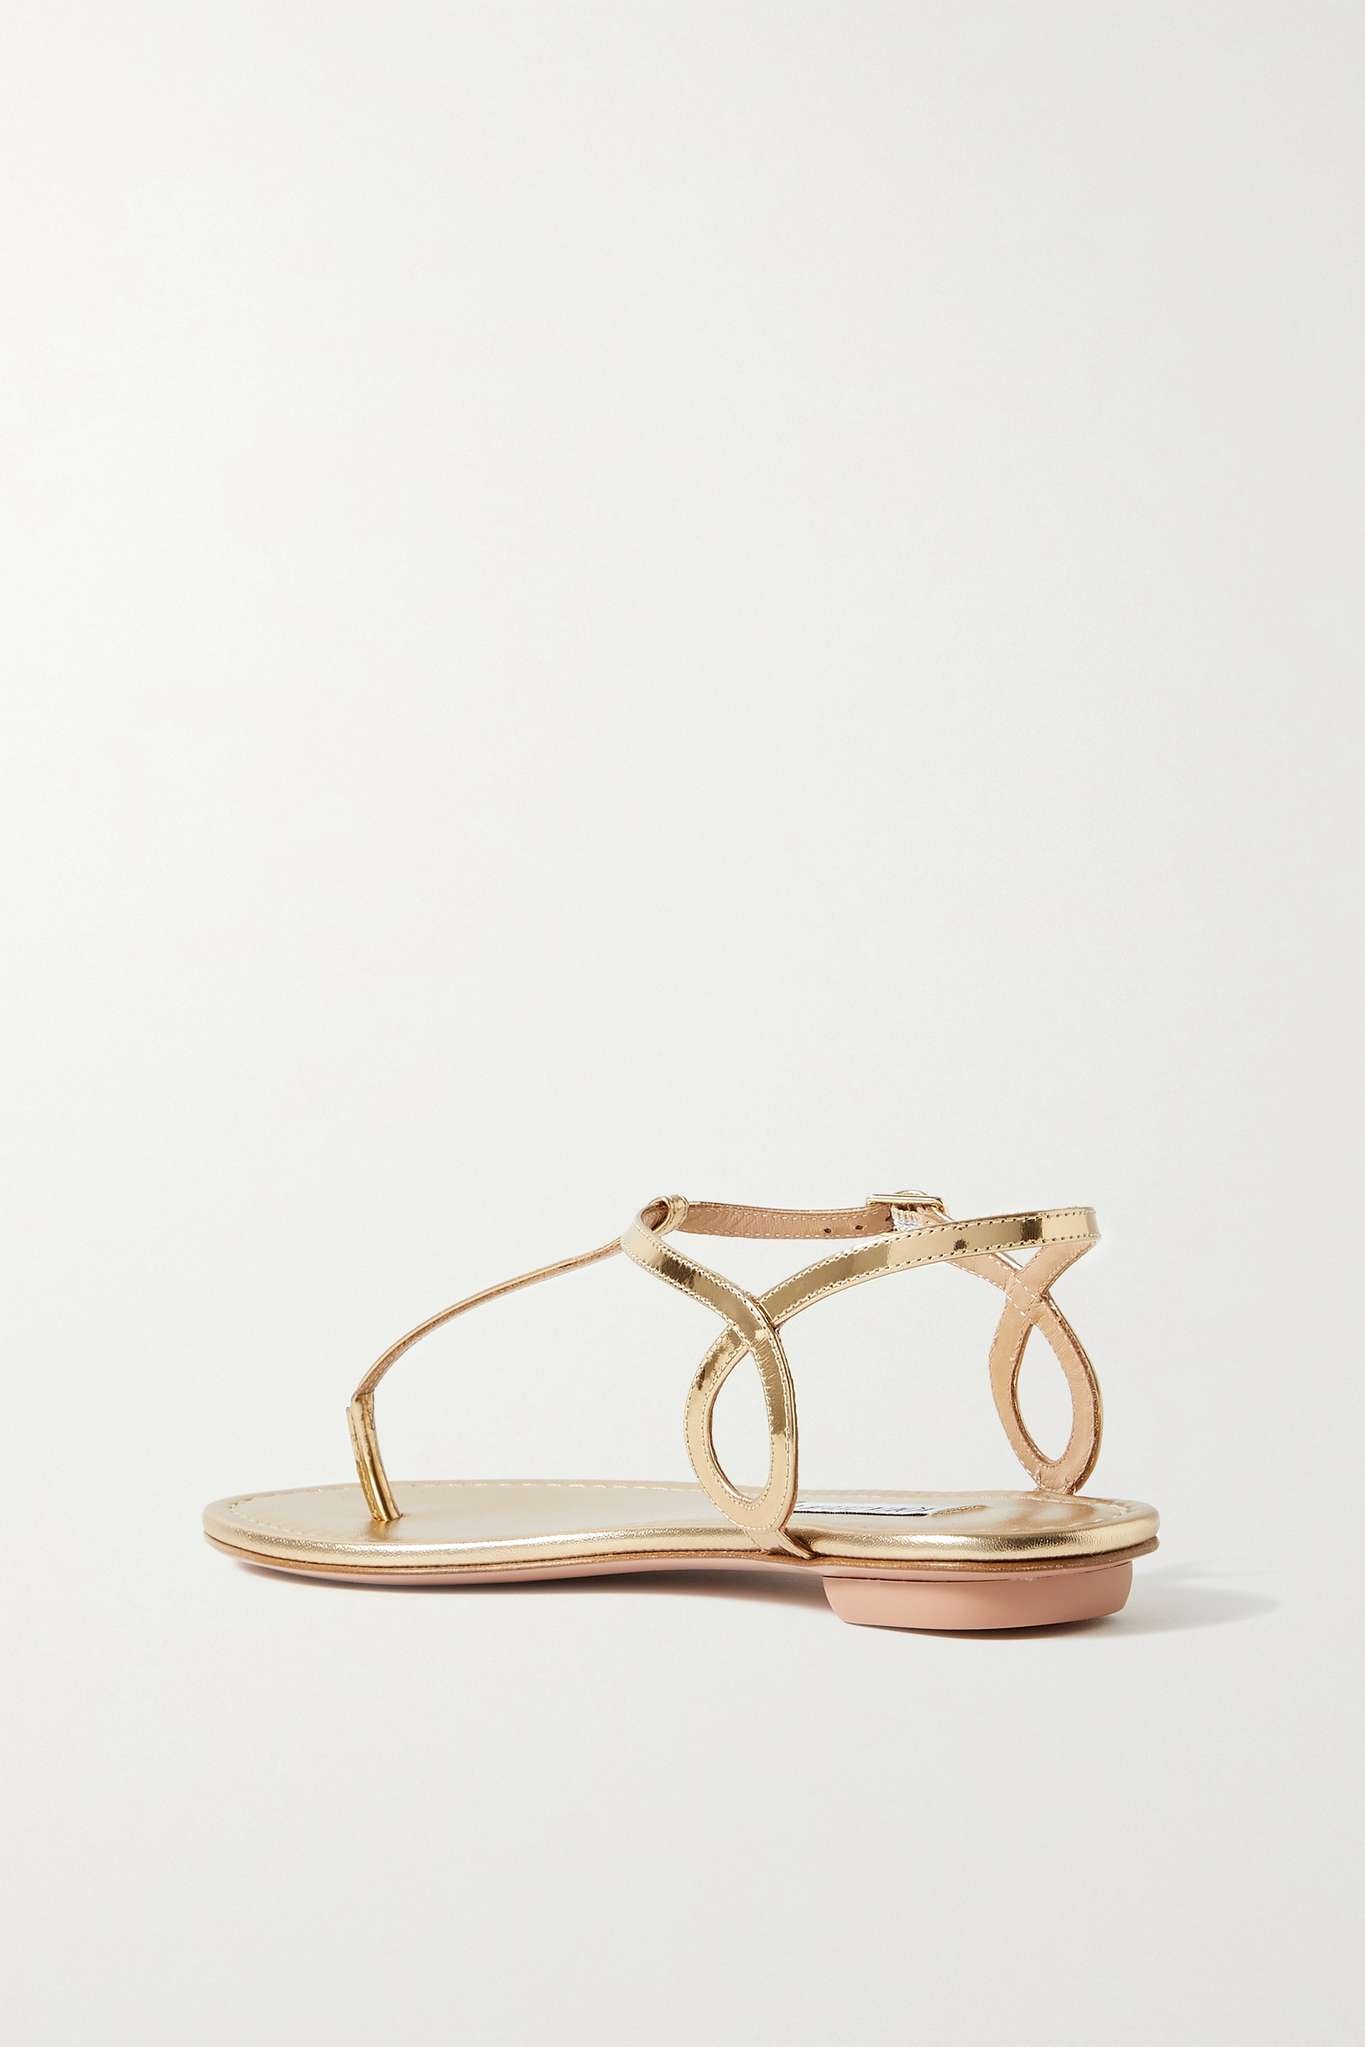 AQUAZZURA Almost Bare metallic leather sandals | REVERSIBLE